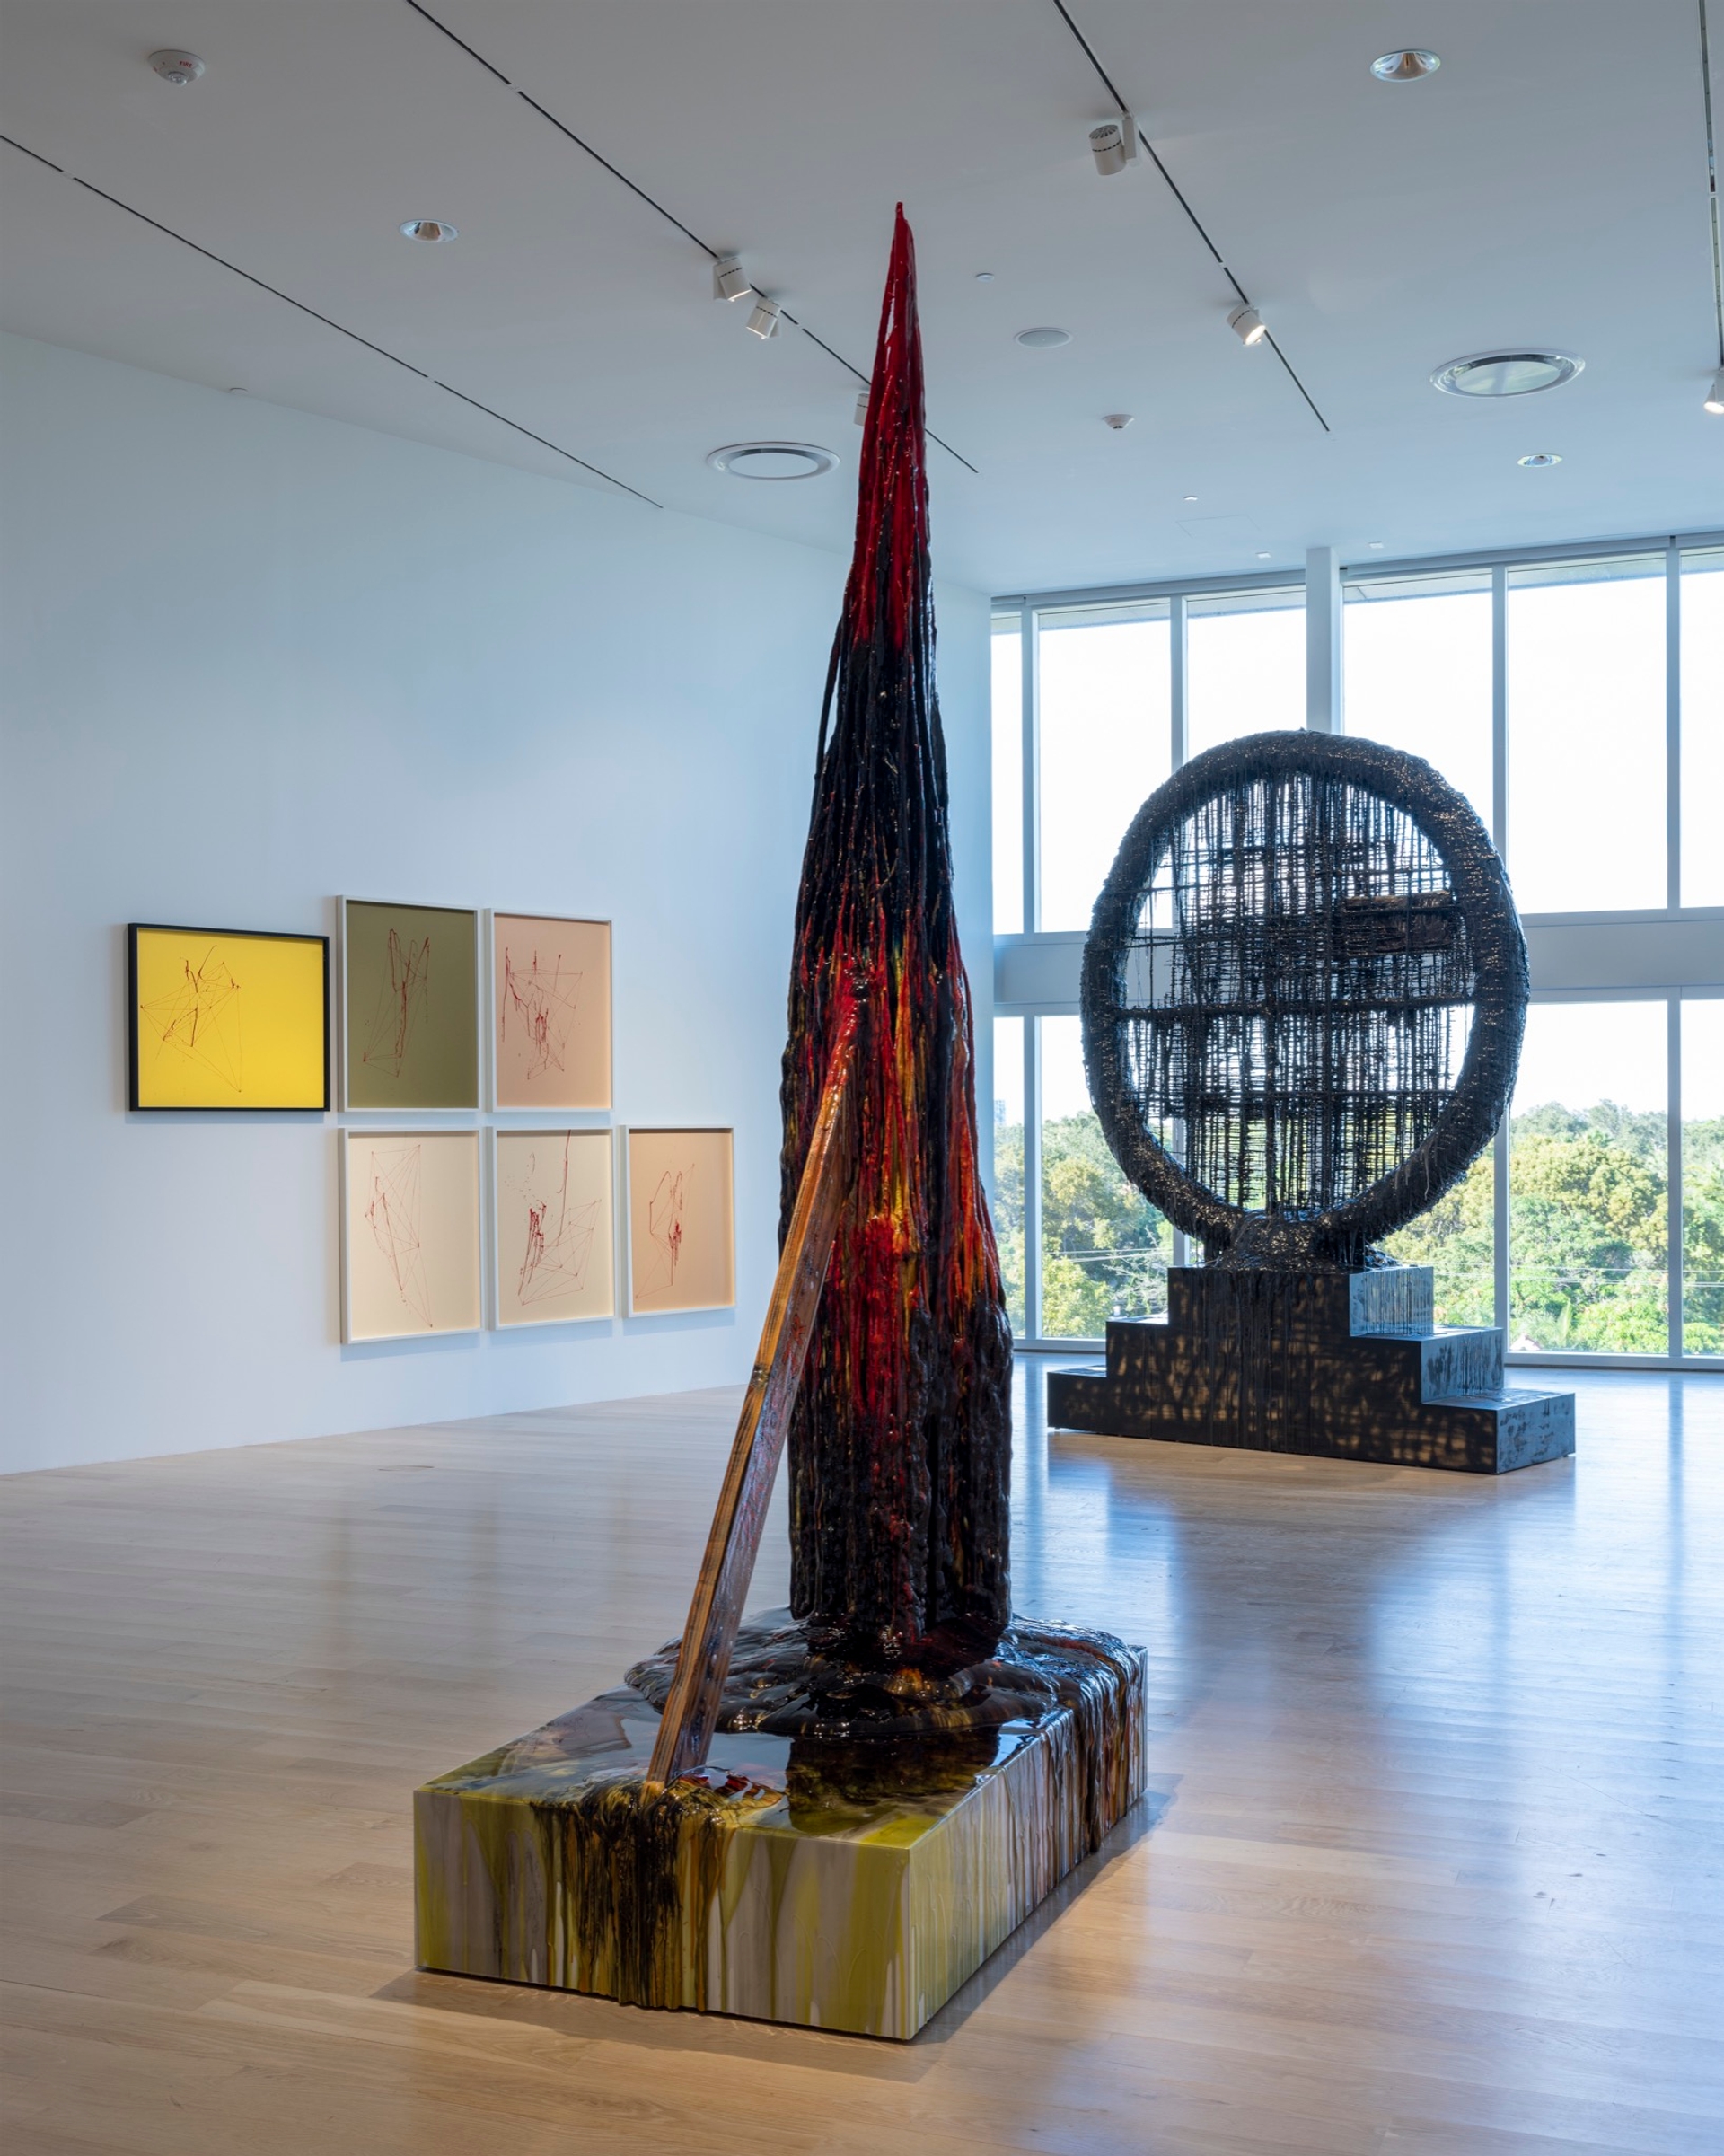 Installation view: "Sterling Ruby" at the Institute of Contemporary Art, Miami. Nov 7, 2019 – Feb 2, 2020. Photo: Fredrik Nilsen Studio.